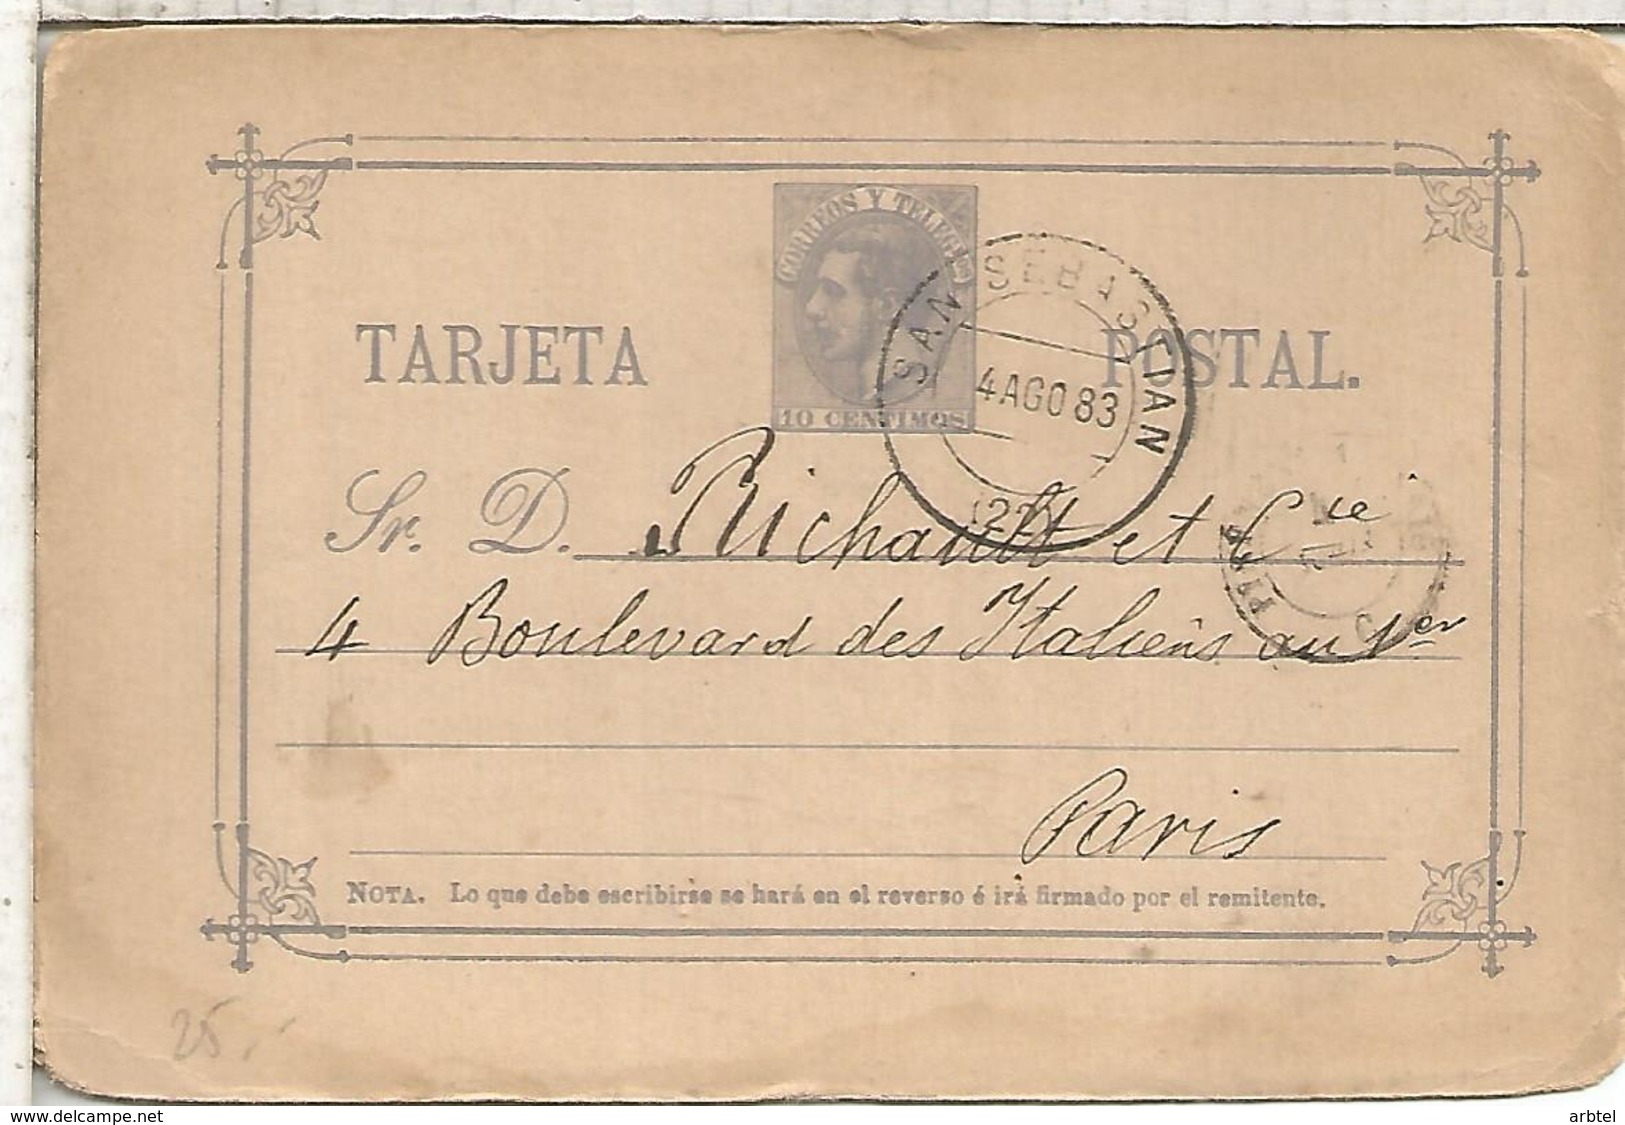 SAN SEBASTIAN A PARIS TARJETA ENTERO POSTAL SPAIN STATIONERY CARD VARIEDAD SR ROTO - 1850-1931